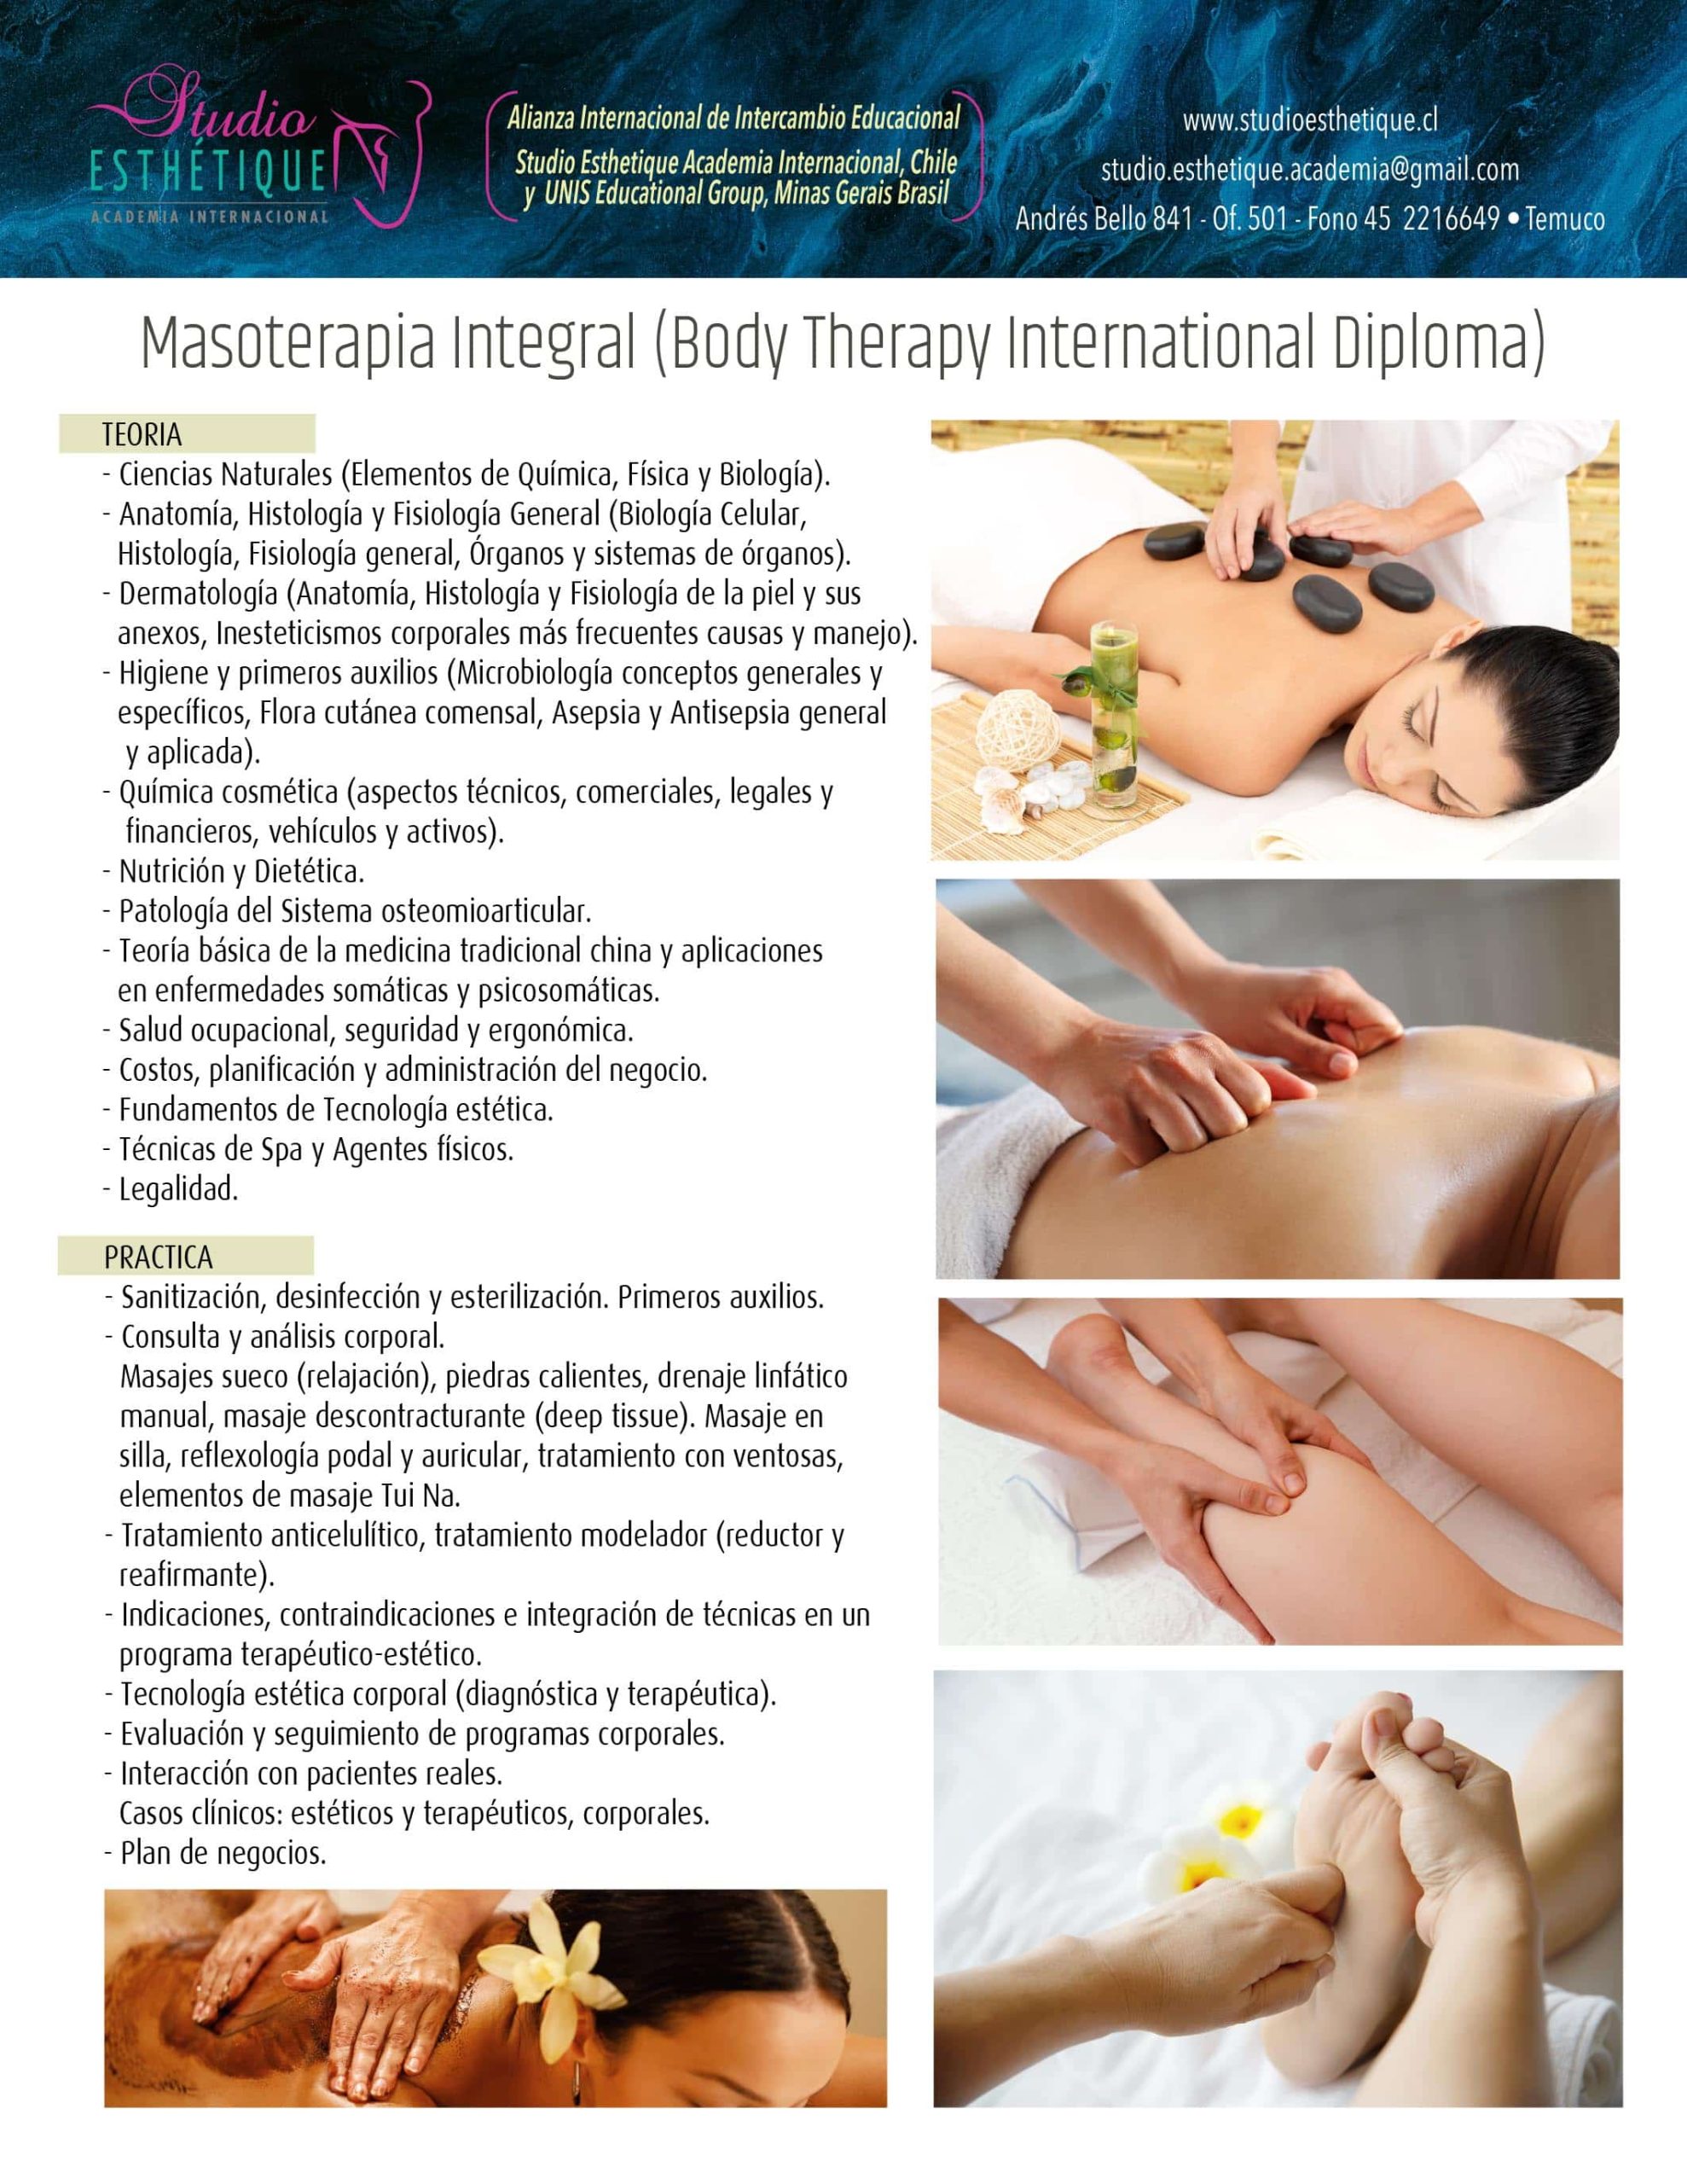 Estética corporal, Masoterapia, Body therapy